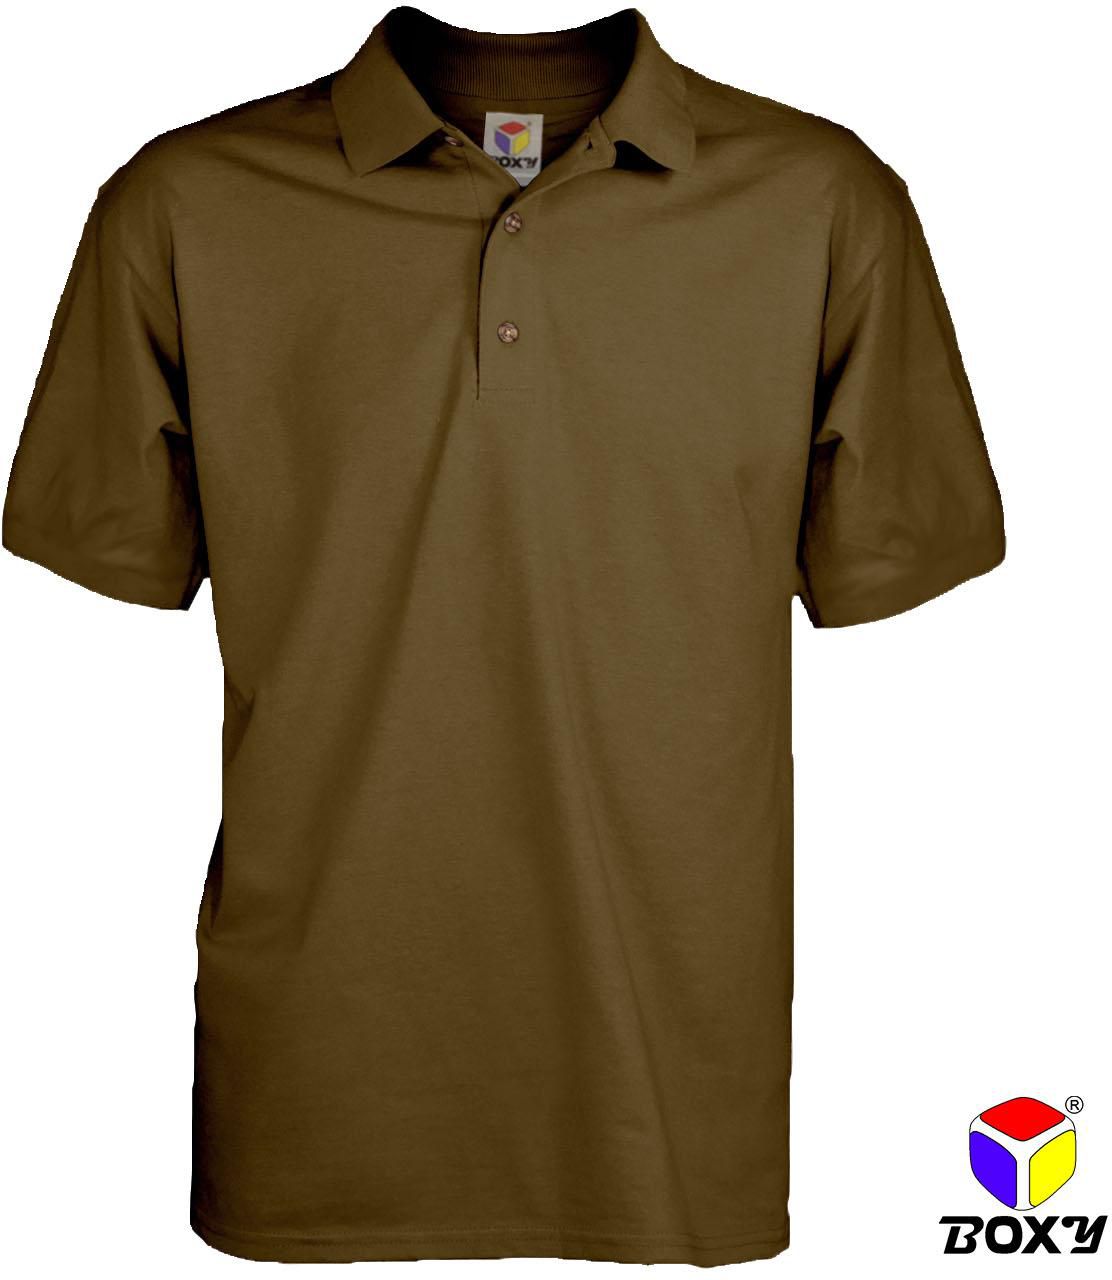 BOXY Microfiber  Short Sleeve Polo Shirts - 7 Sizes (Dark Brown)